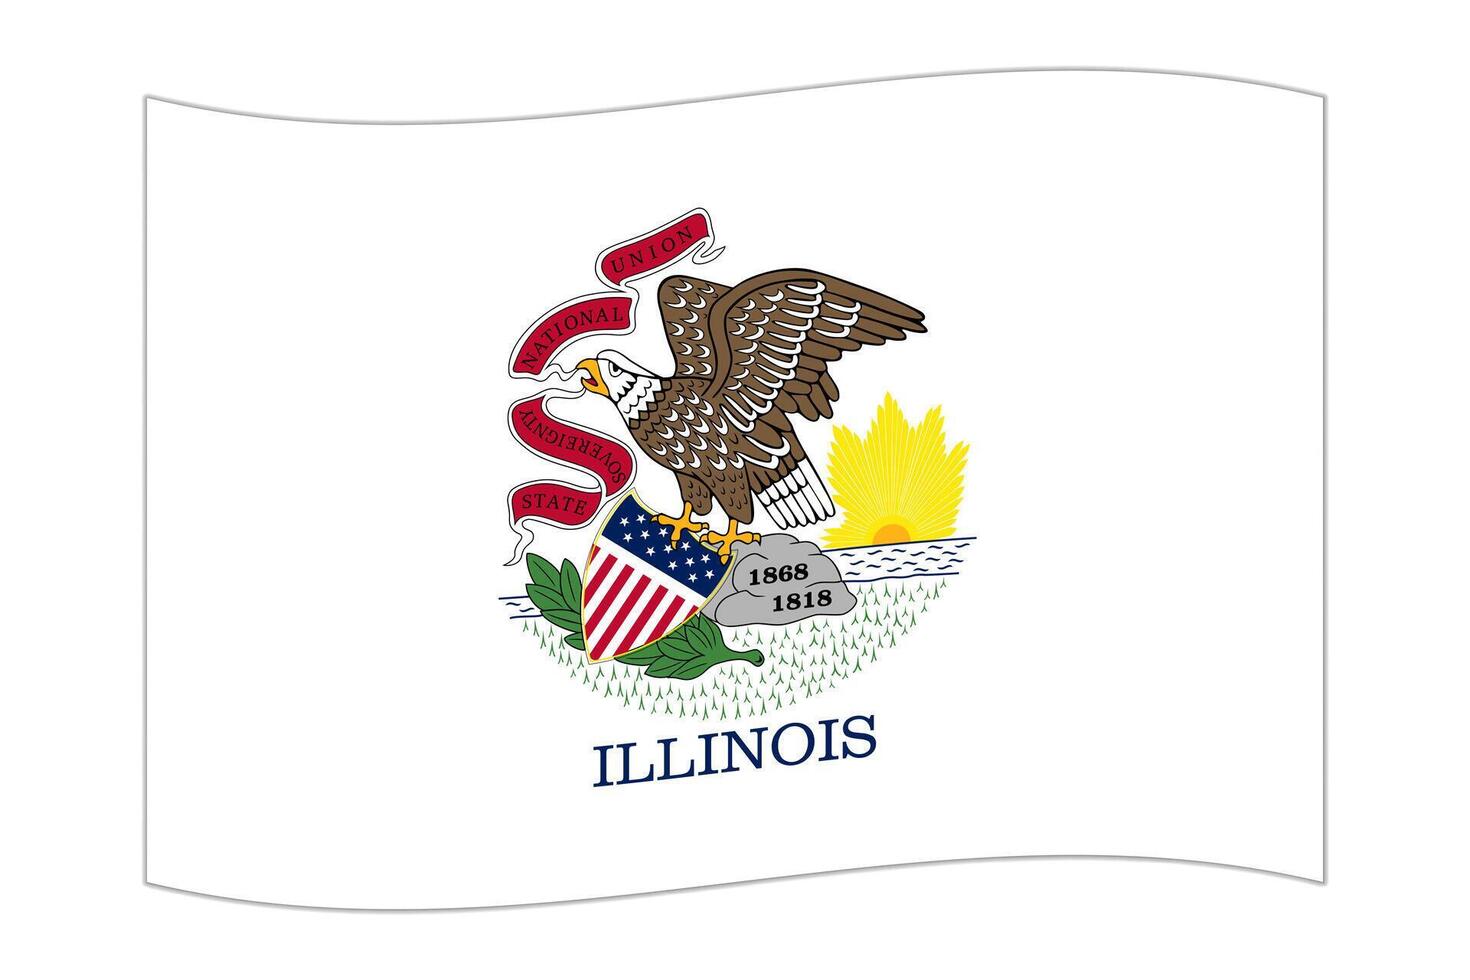 vinka flagga av de Illinois stat. vektor illustration.